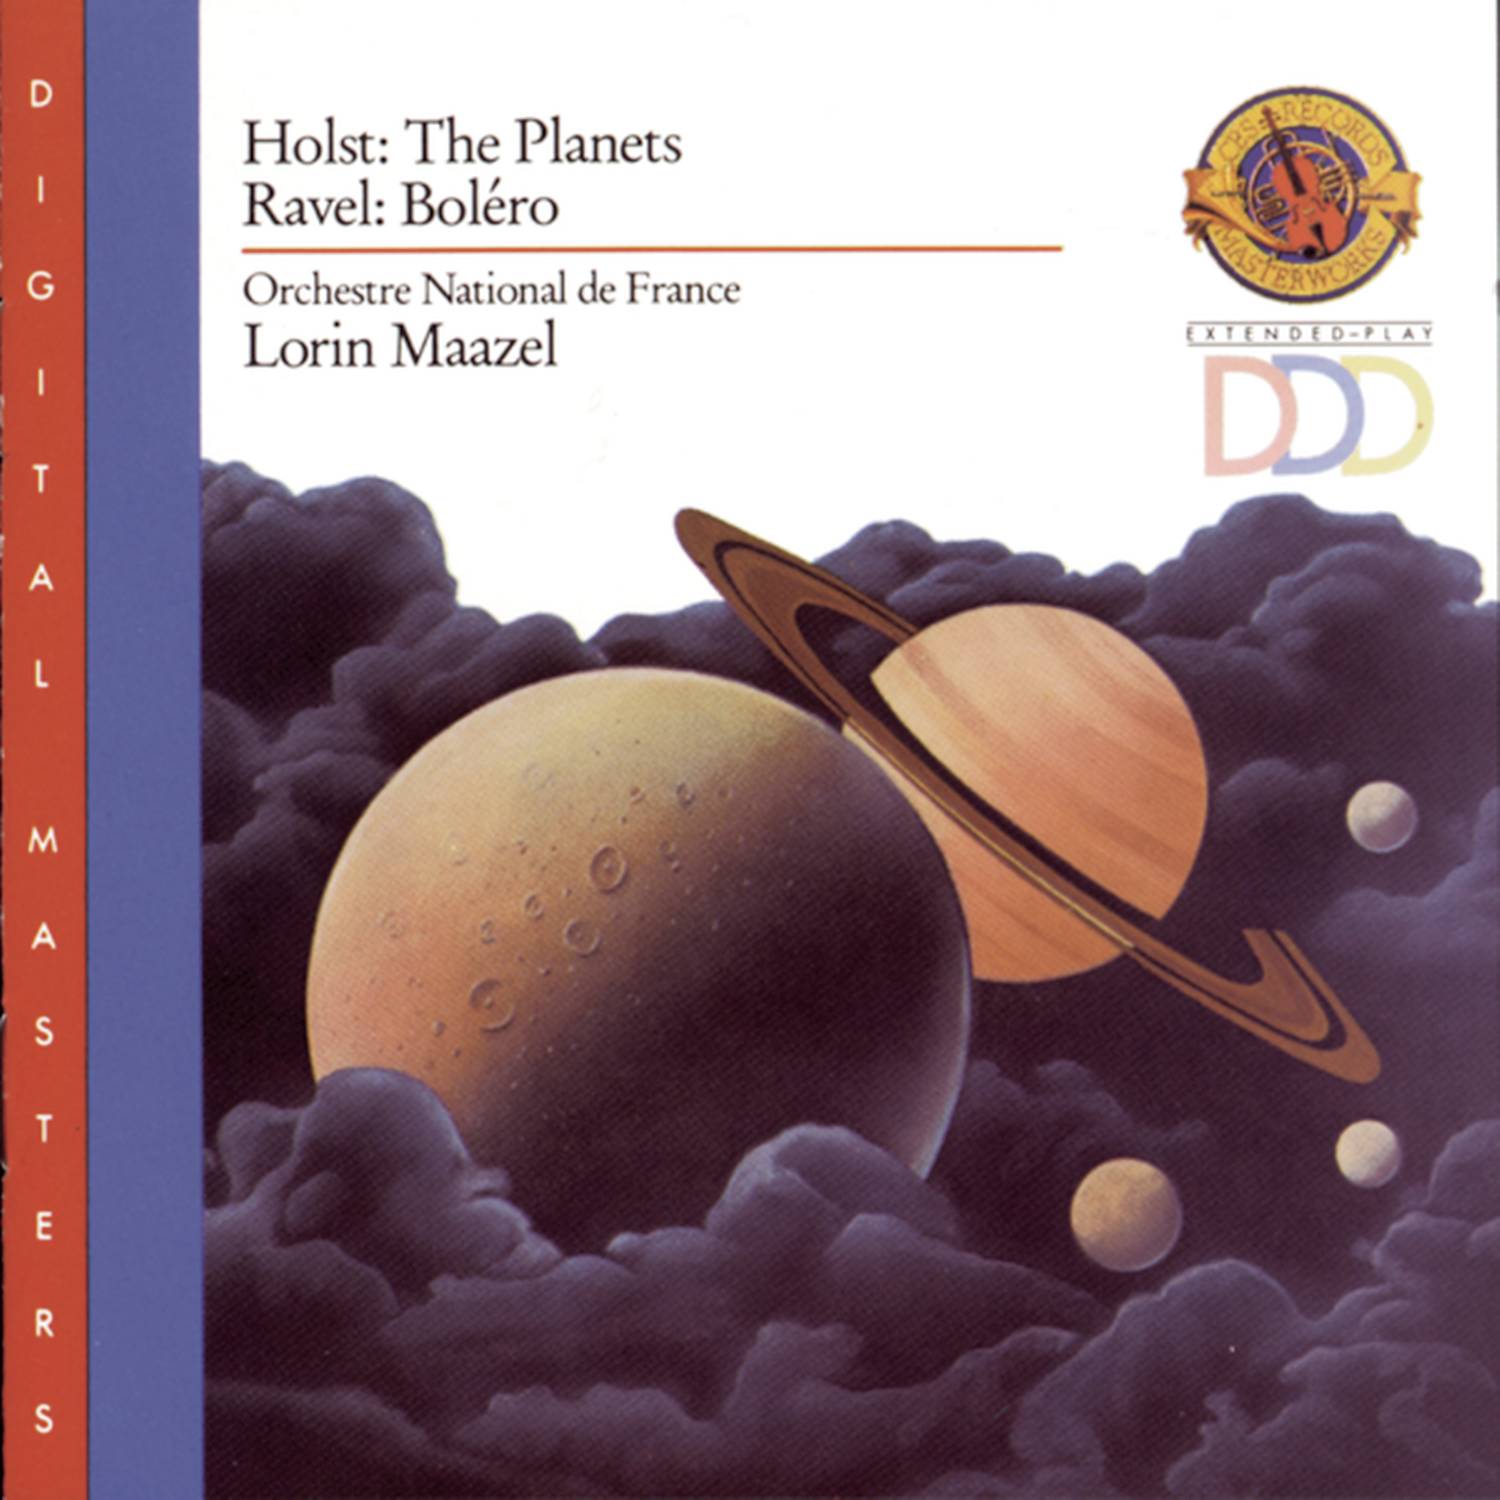 Holst: The Planets and Ravel: Bolero